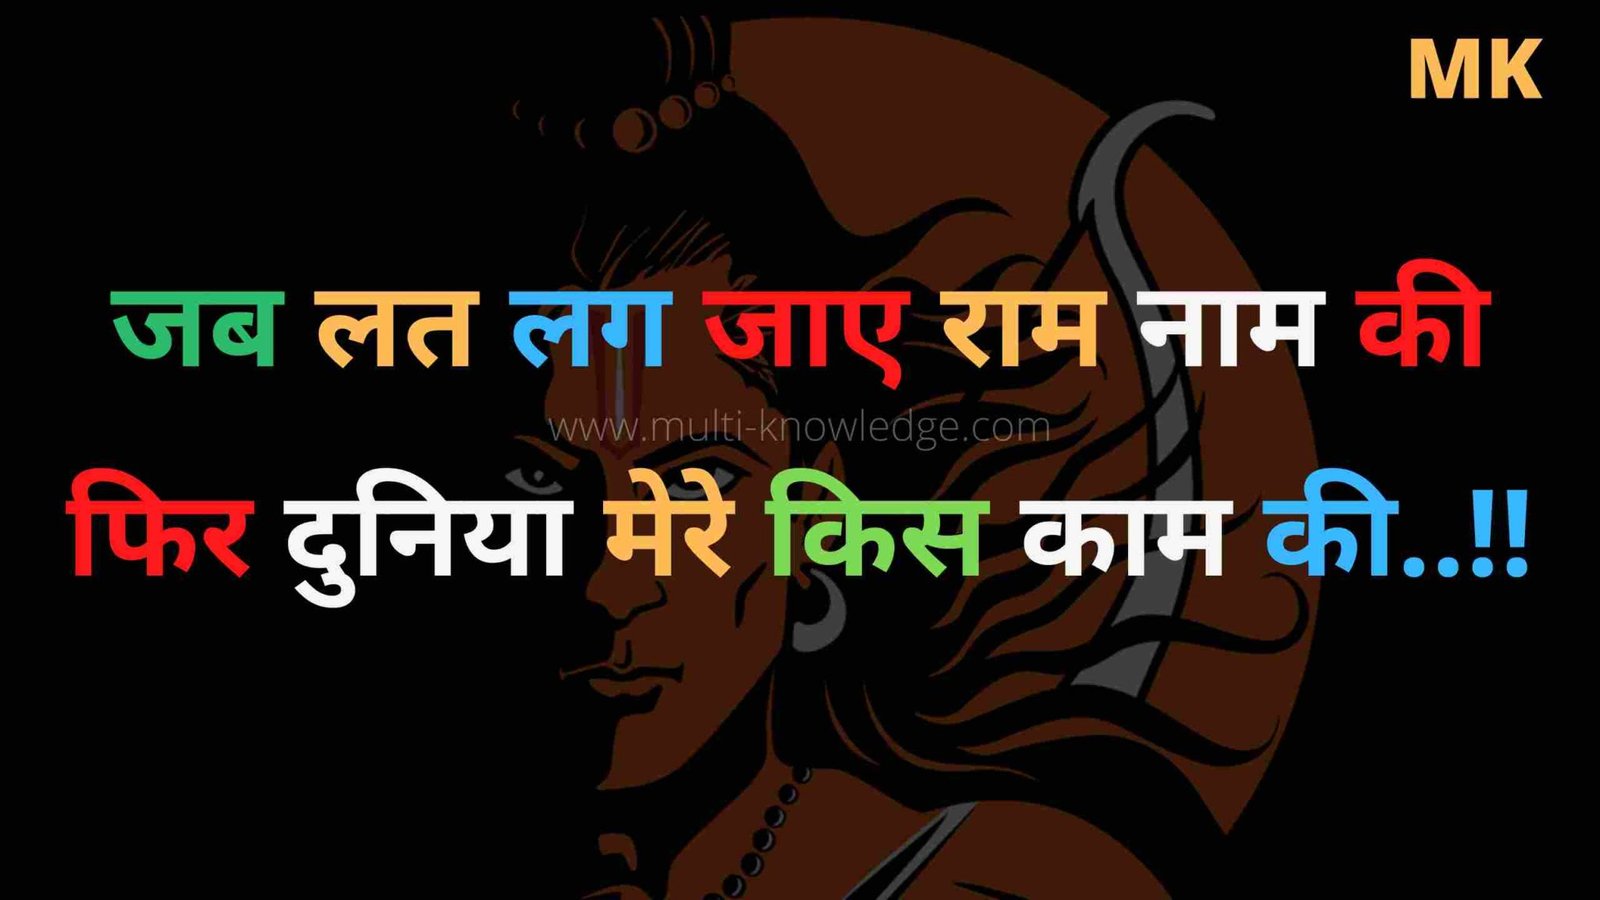 Kattar hindu Jai Shri Ram Status in Hindi with images by multi-knowledge.com